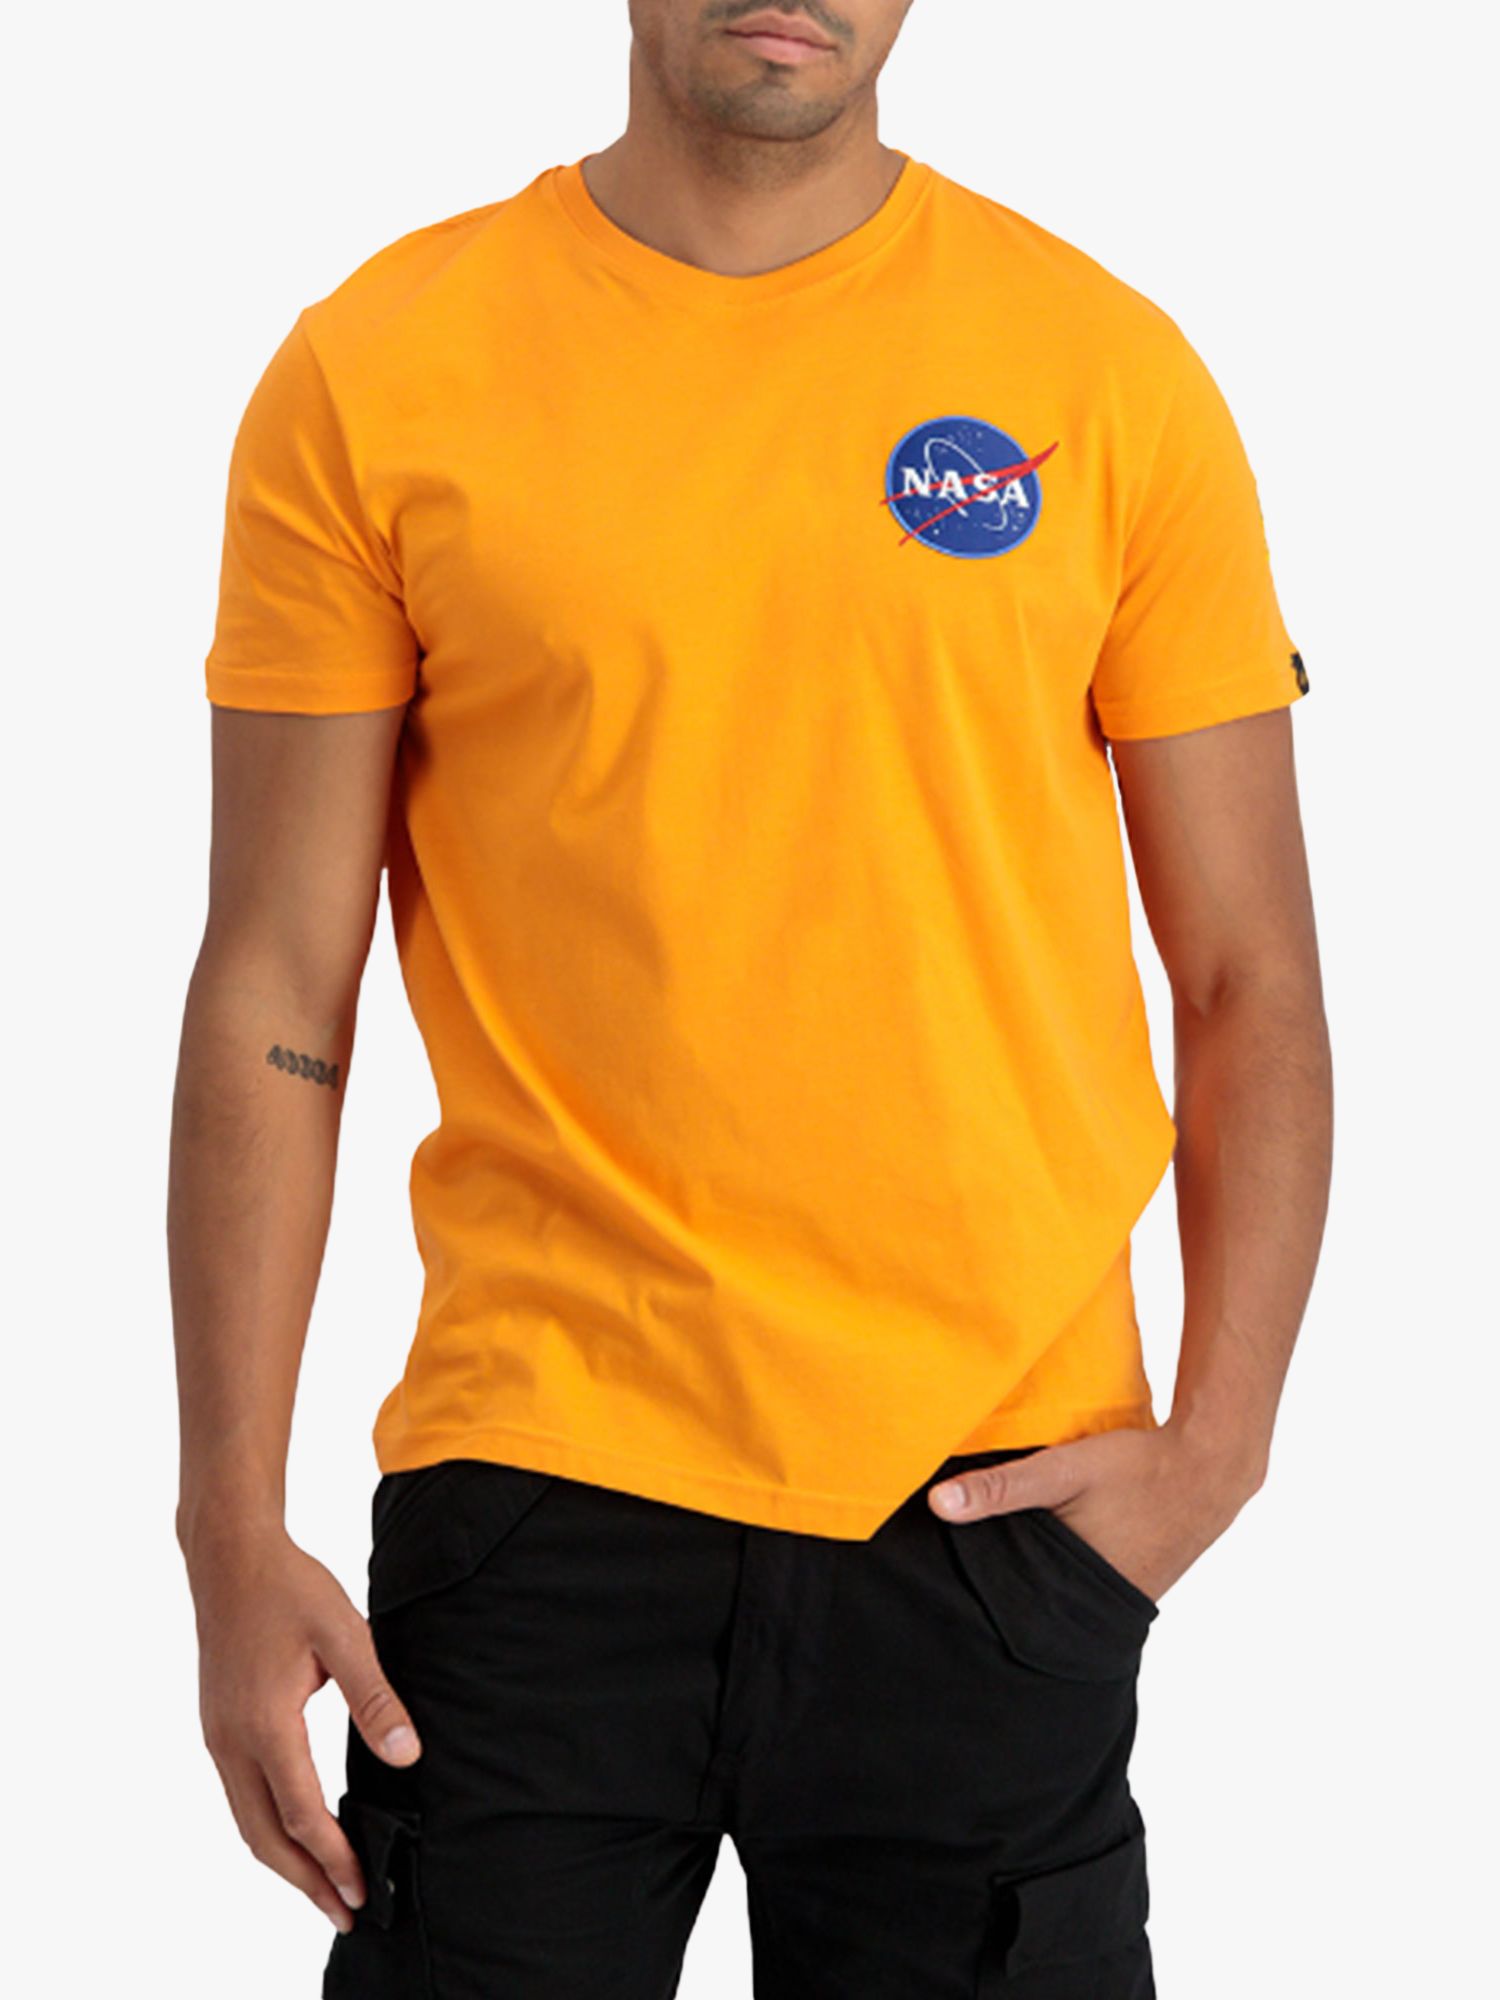 Alpha Industries X NASA T-Shirt, Orange & Lewis Shuttle Logo Alpha at Space Partners John